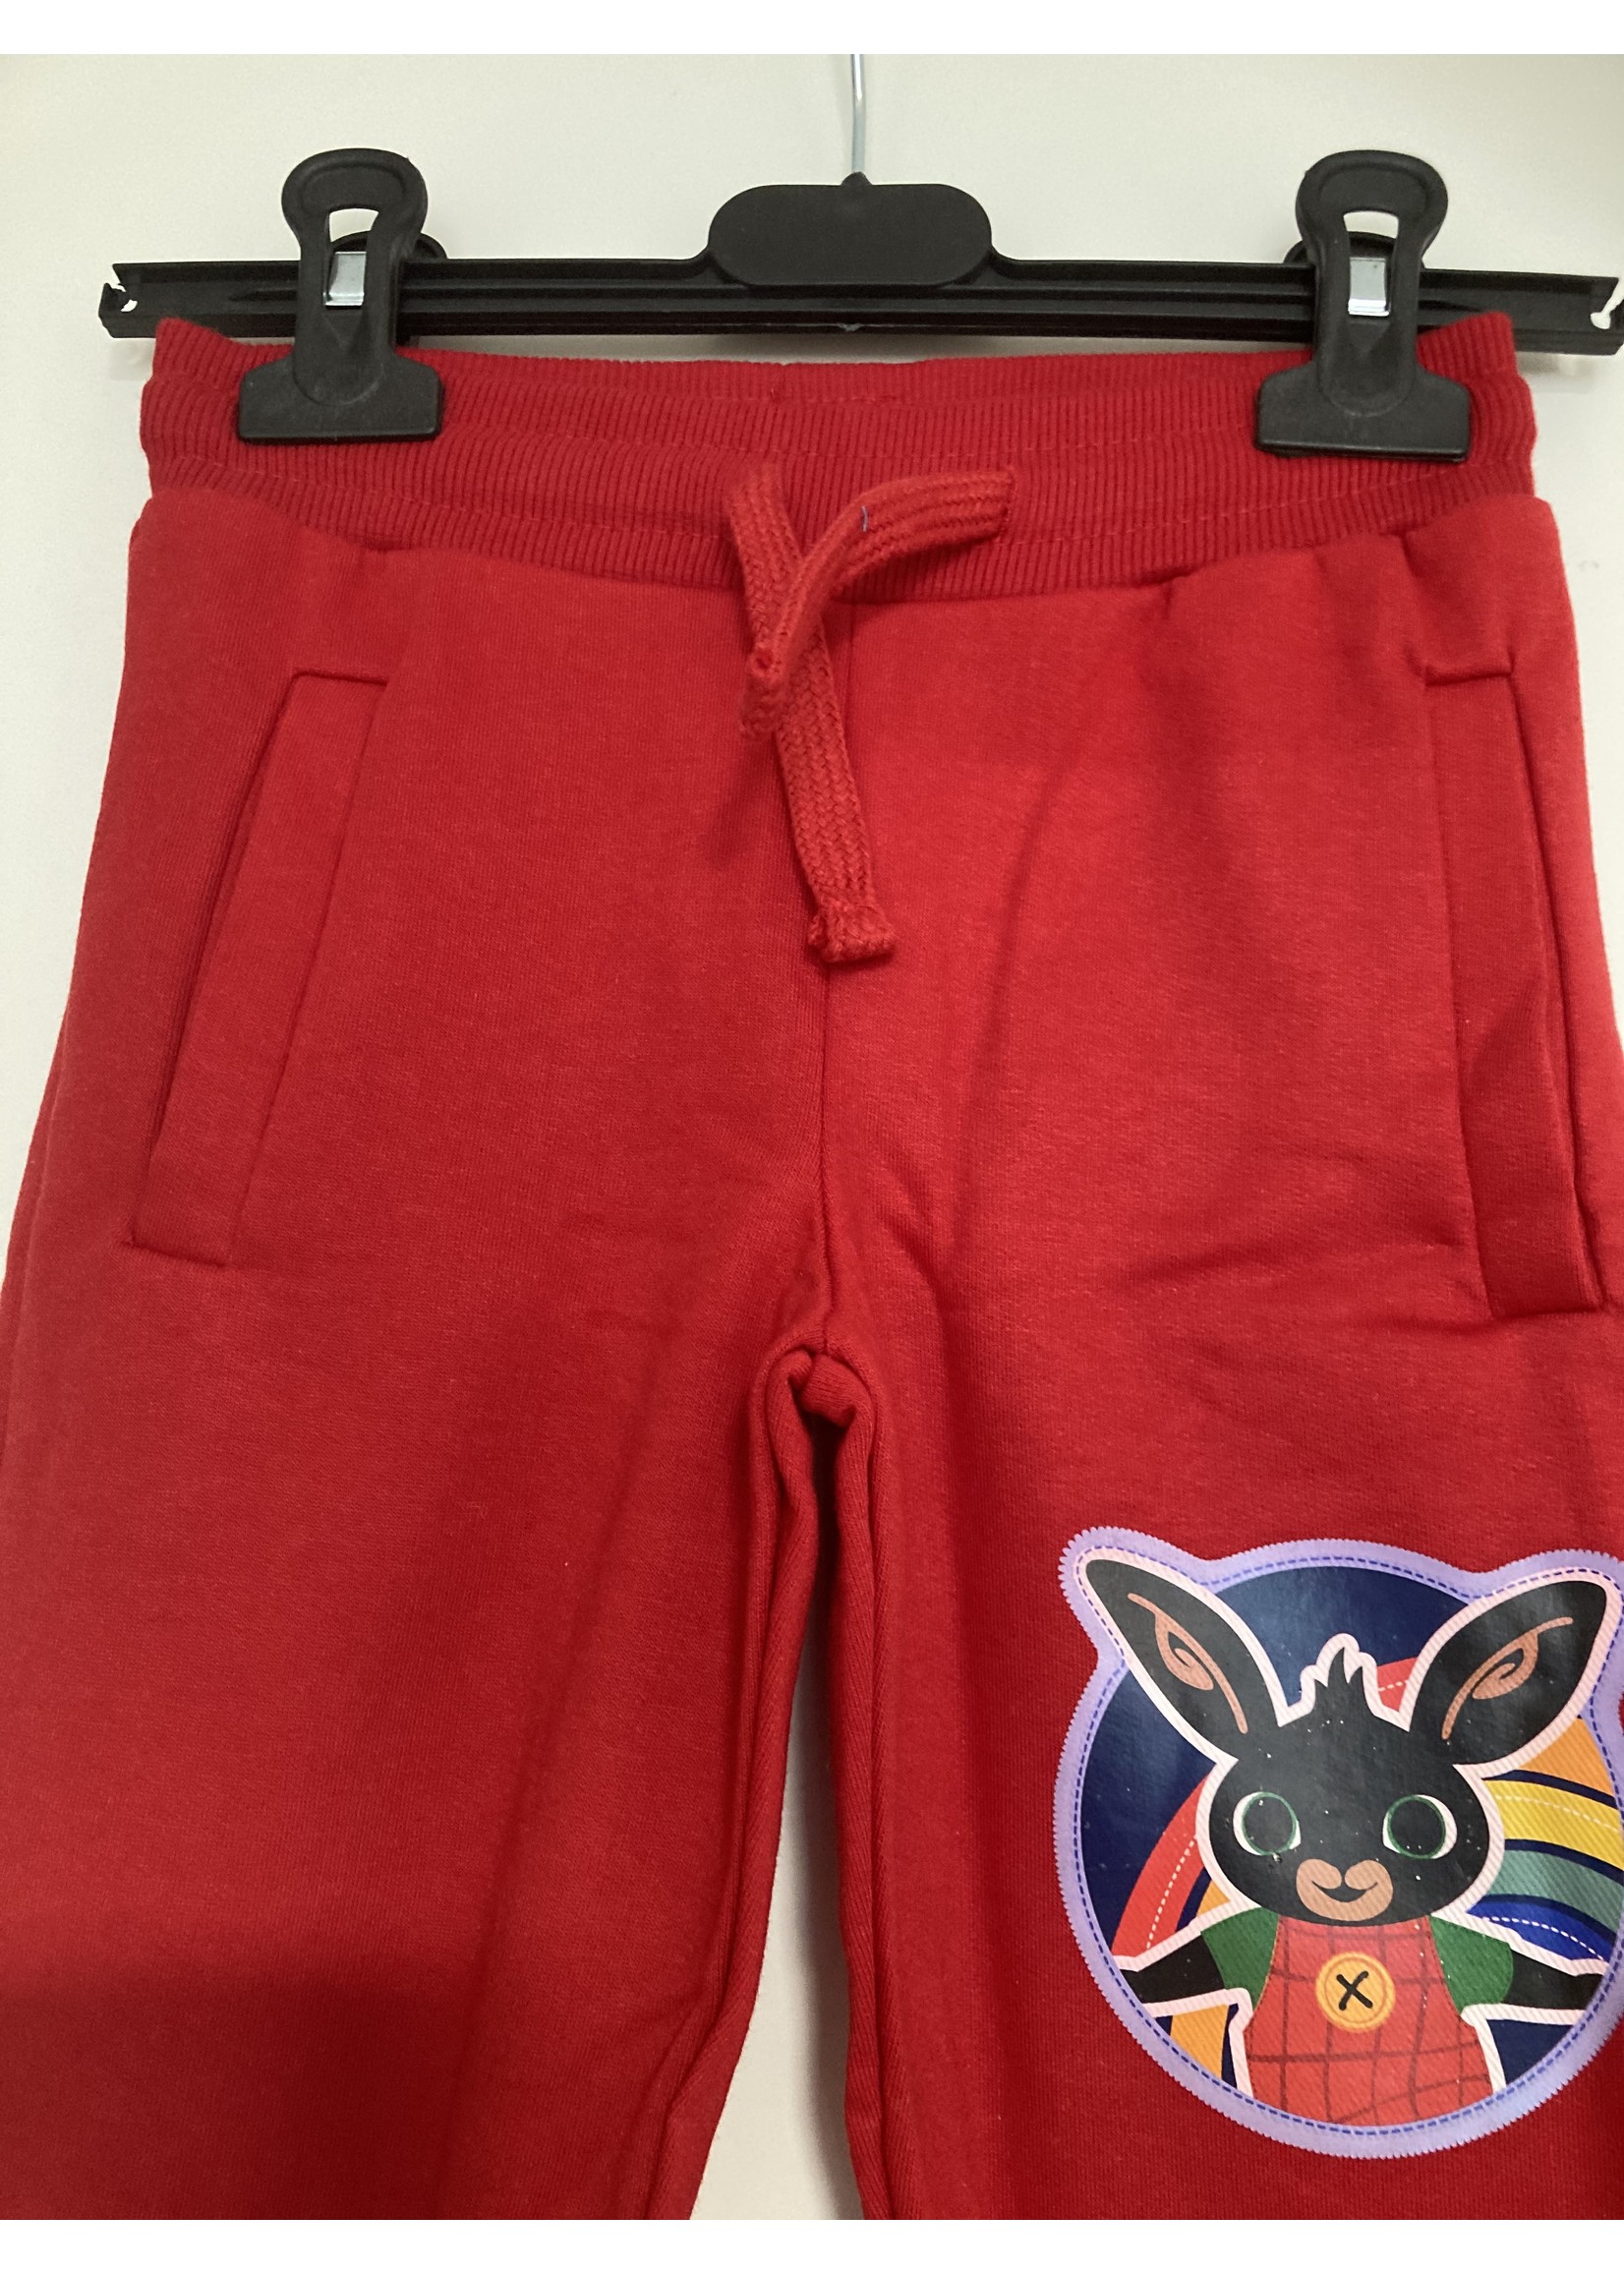 Bing Bunny Bing sweatpants from BING red